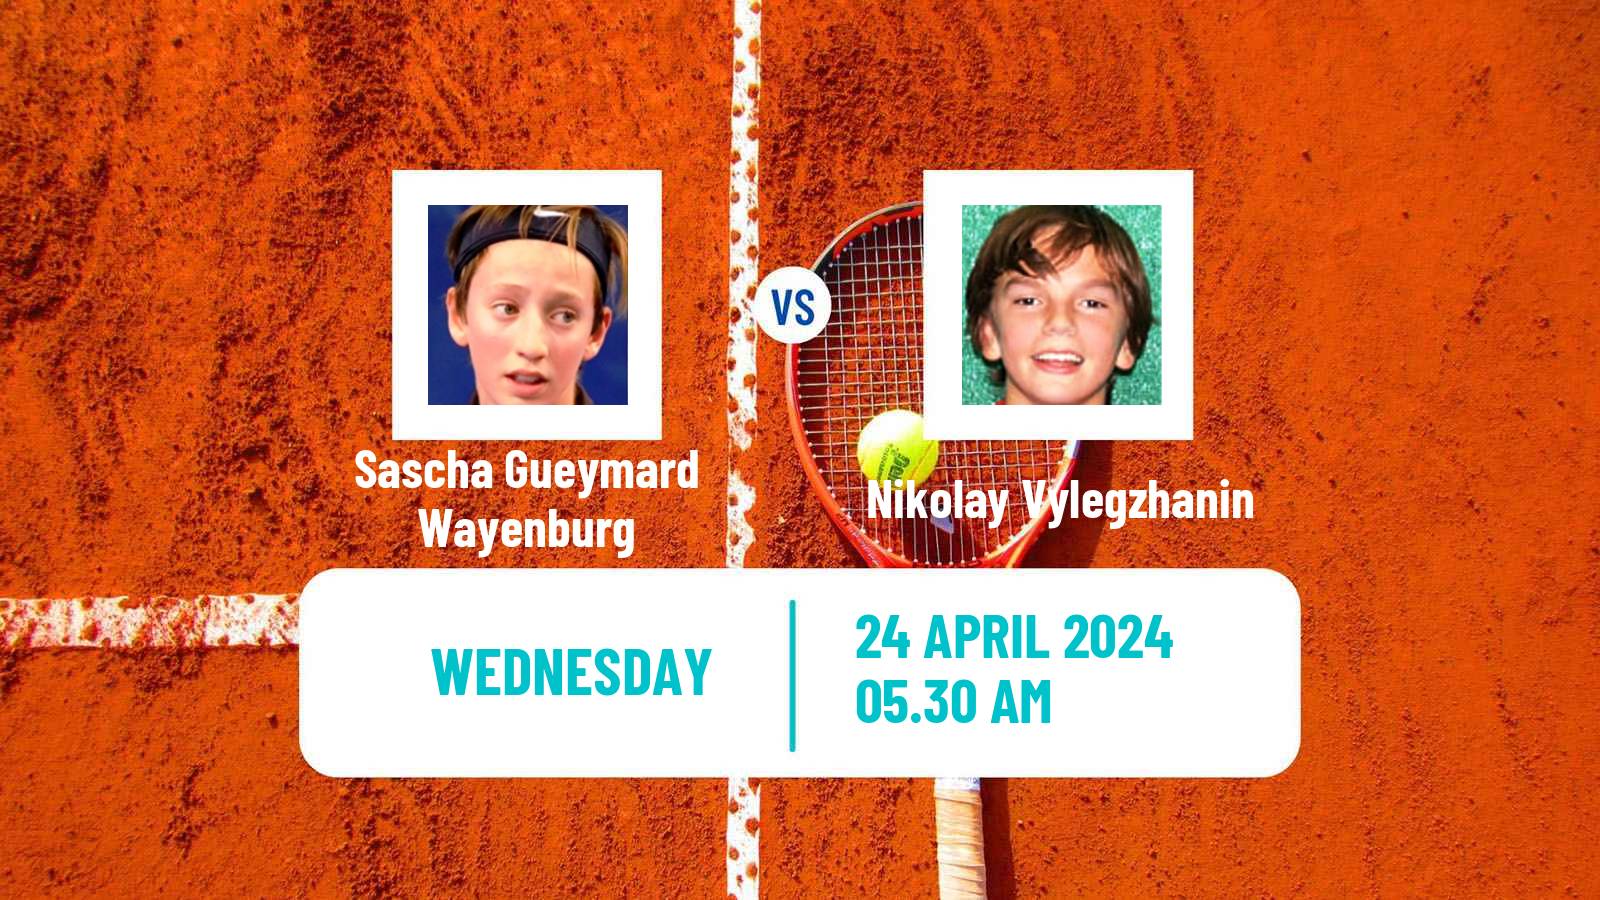 Tennis ITF M25 Angers Men Sascha Gueymard Wayenburg - Nikolay Vylegzhanin